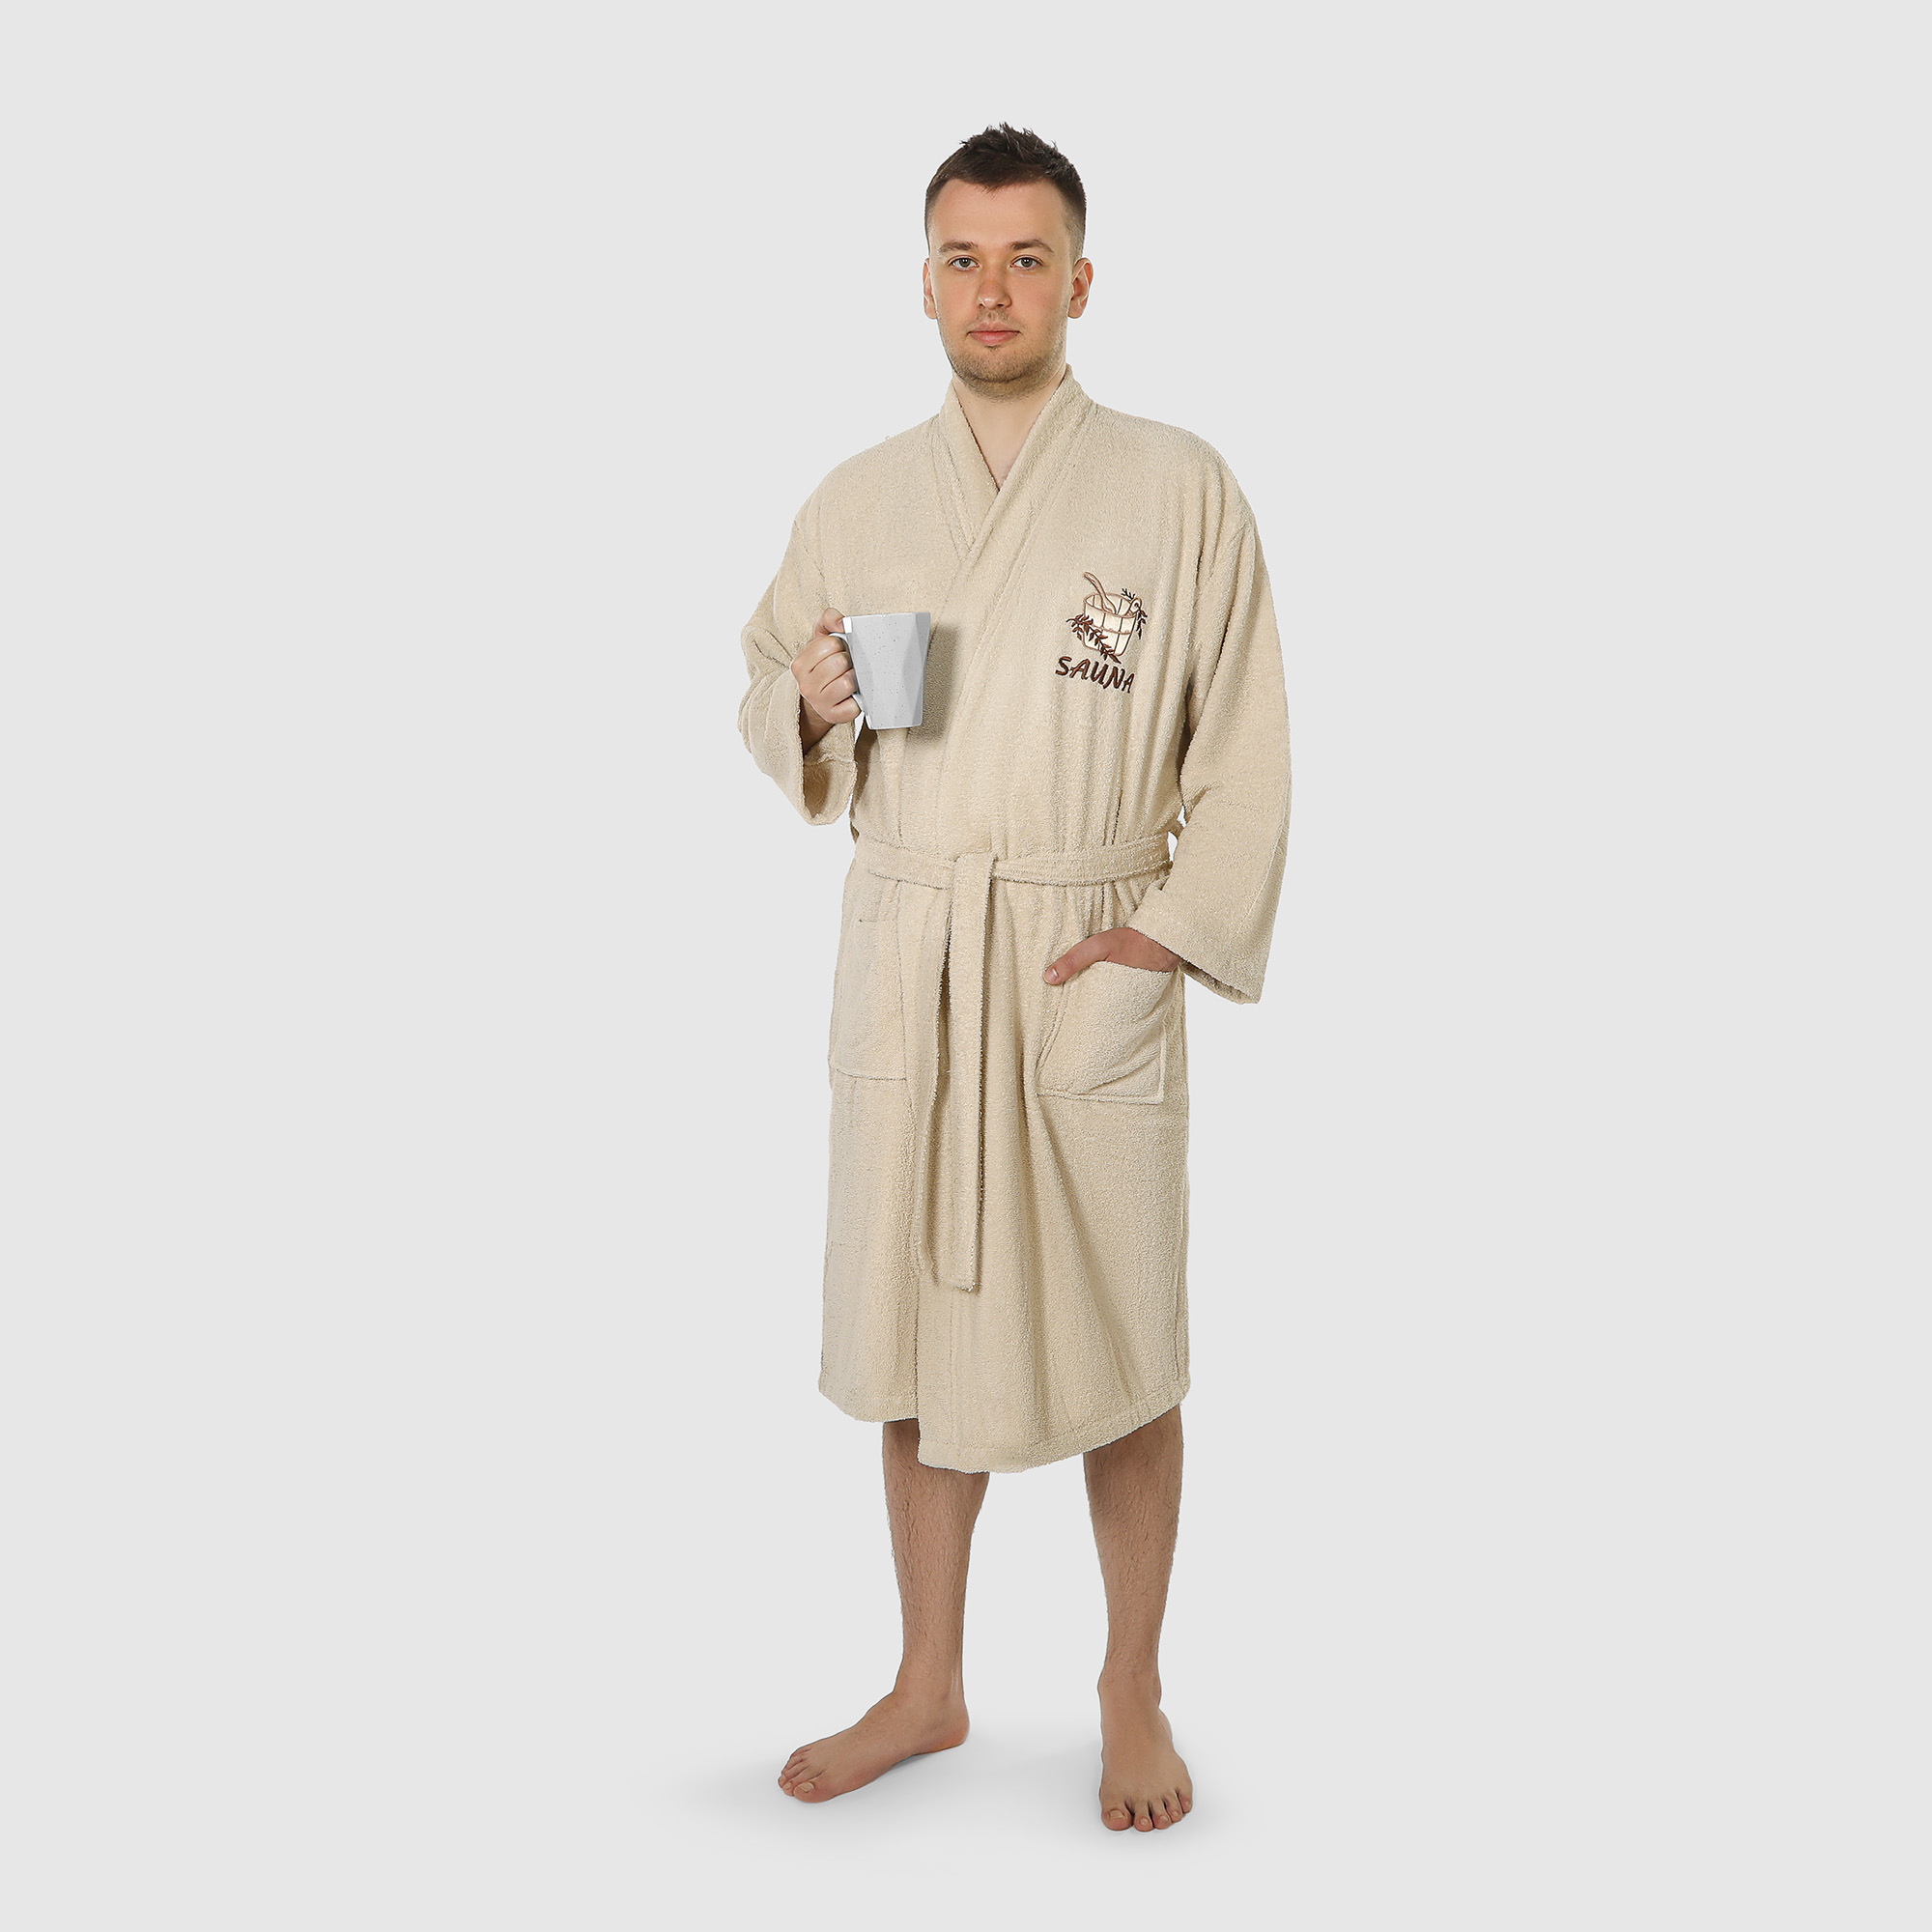 Халат мужской махровый Asil Sauna Kimono brown XL халат мужской asil sauna kimono brown xl вафельный